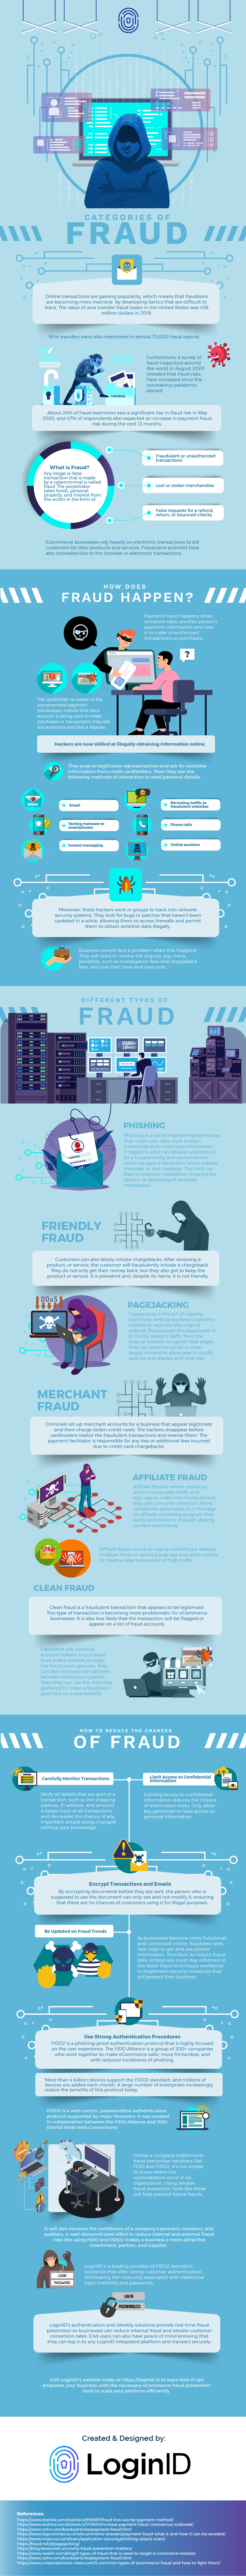 Categories of Fraud -Infographic Image HDAIUHwidoa544163